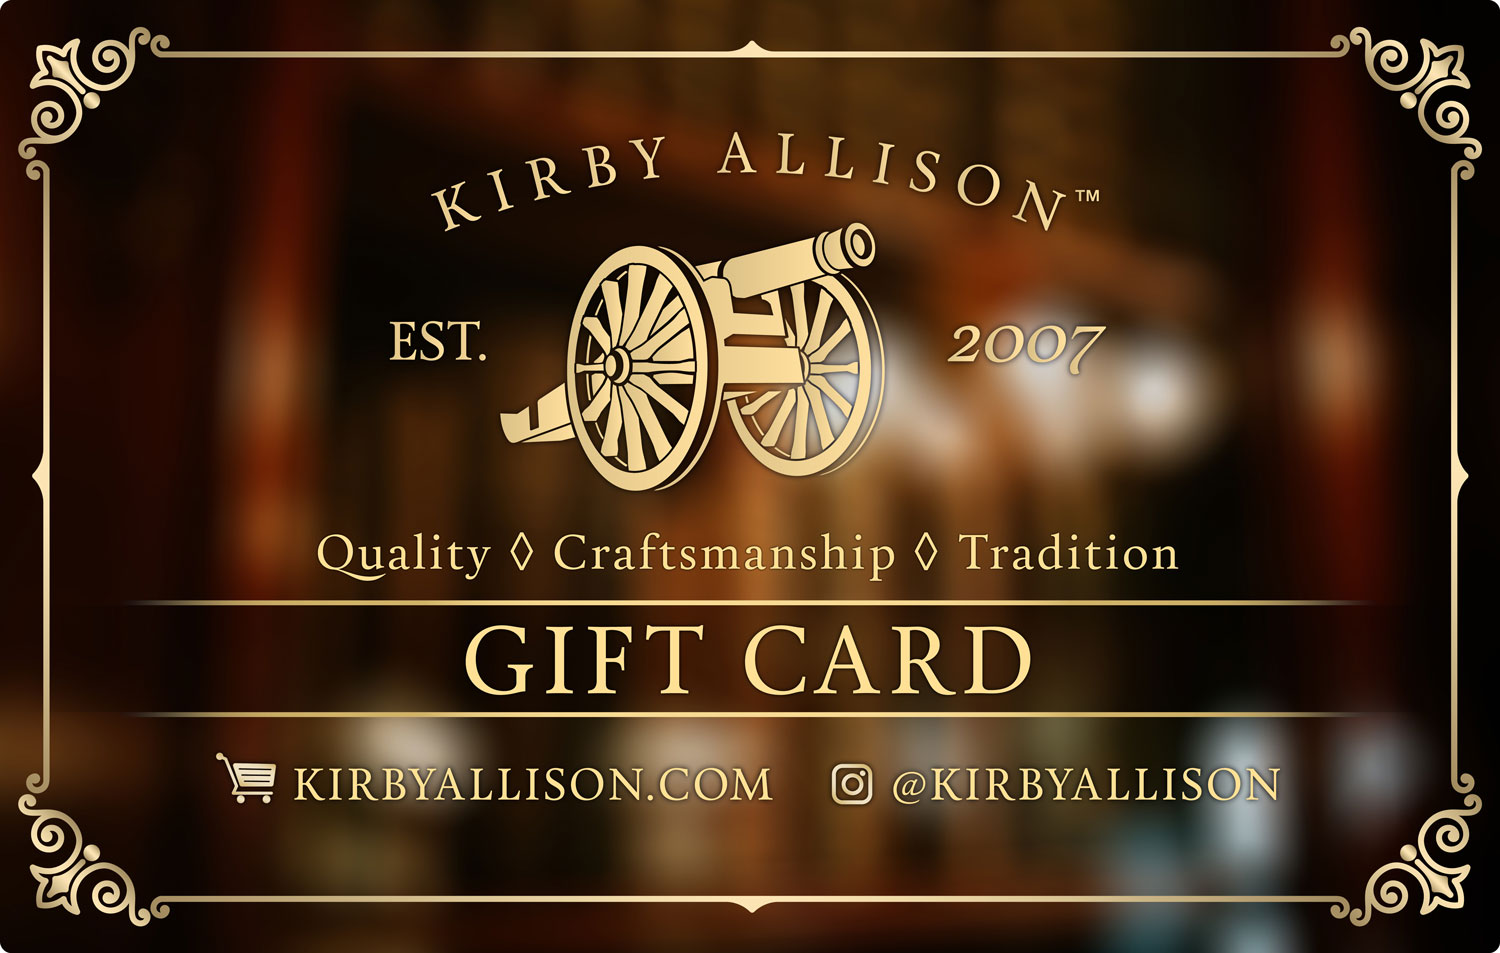 KirbyAllison.com Gift Card for KirbyAllison.com stylish products.